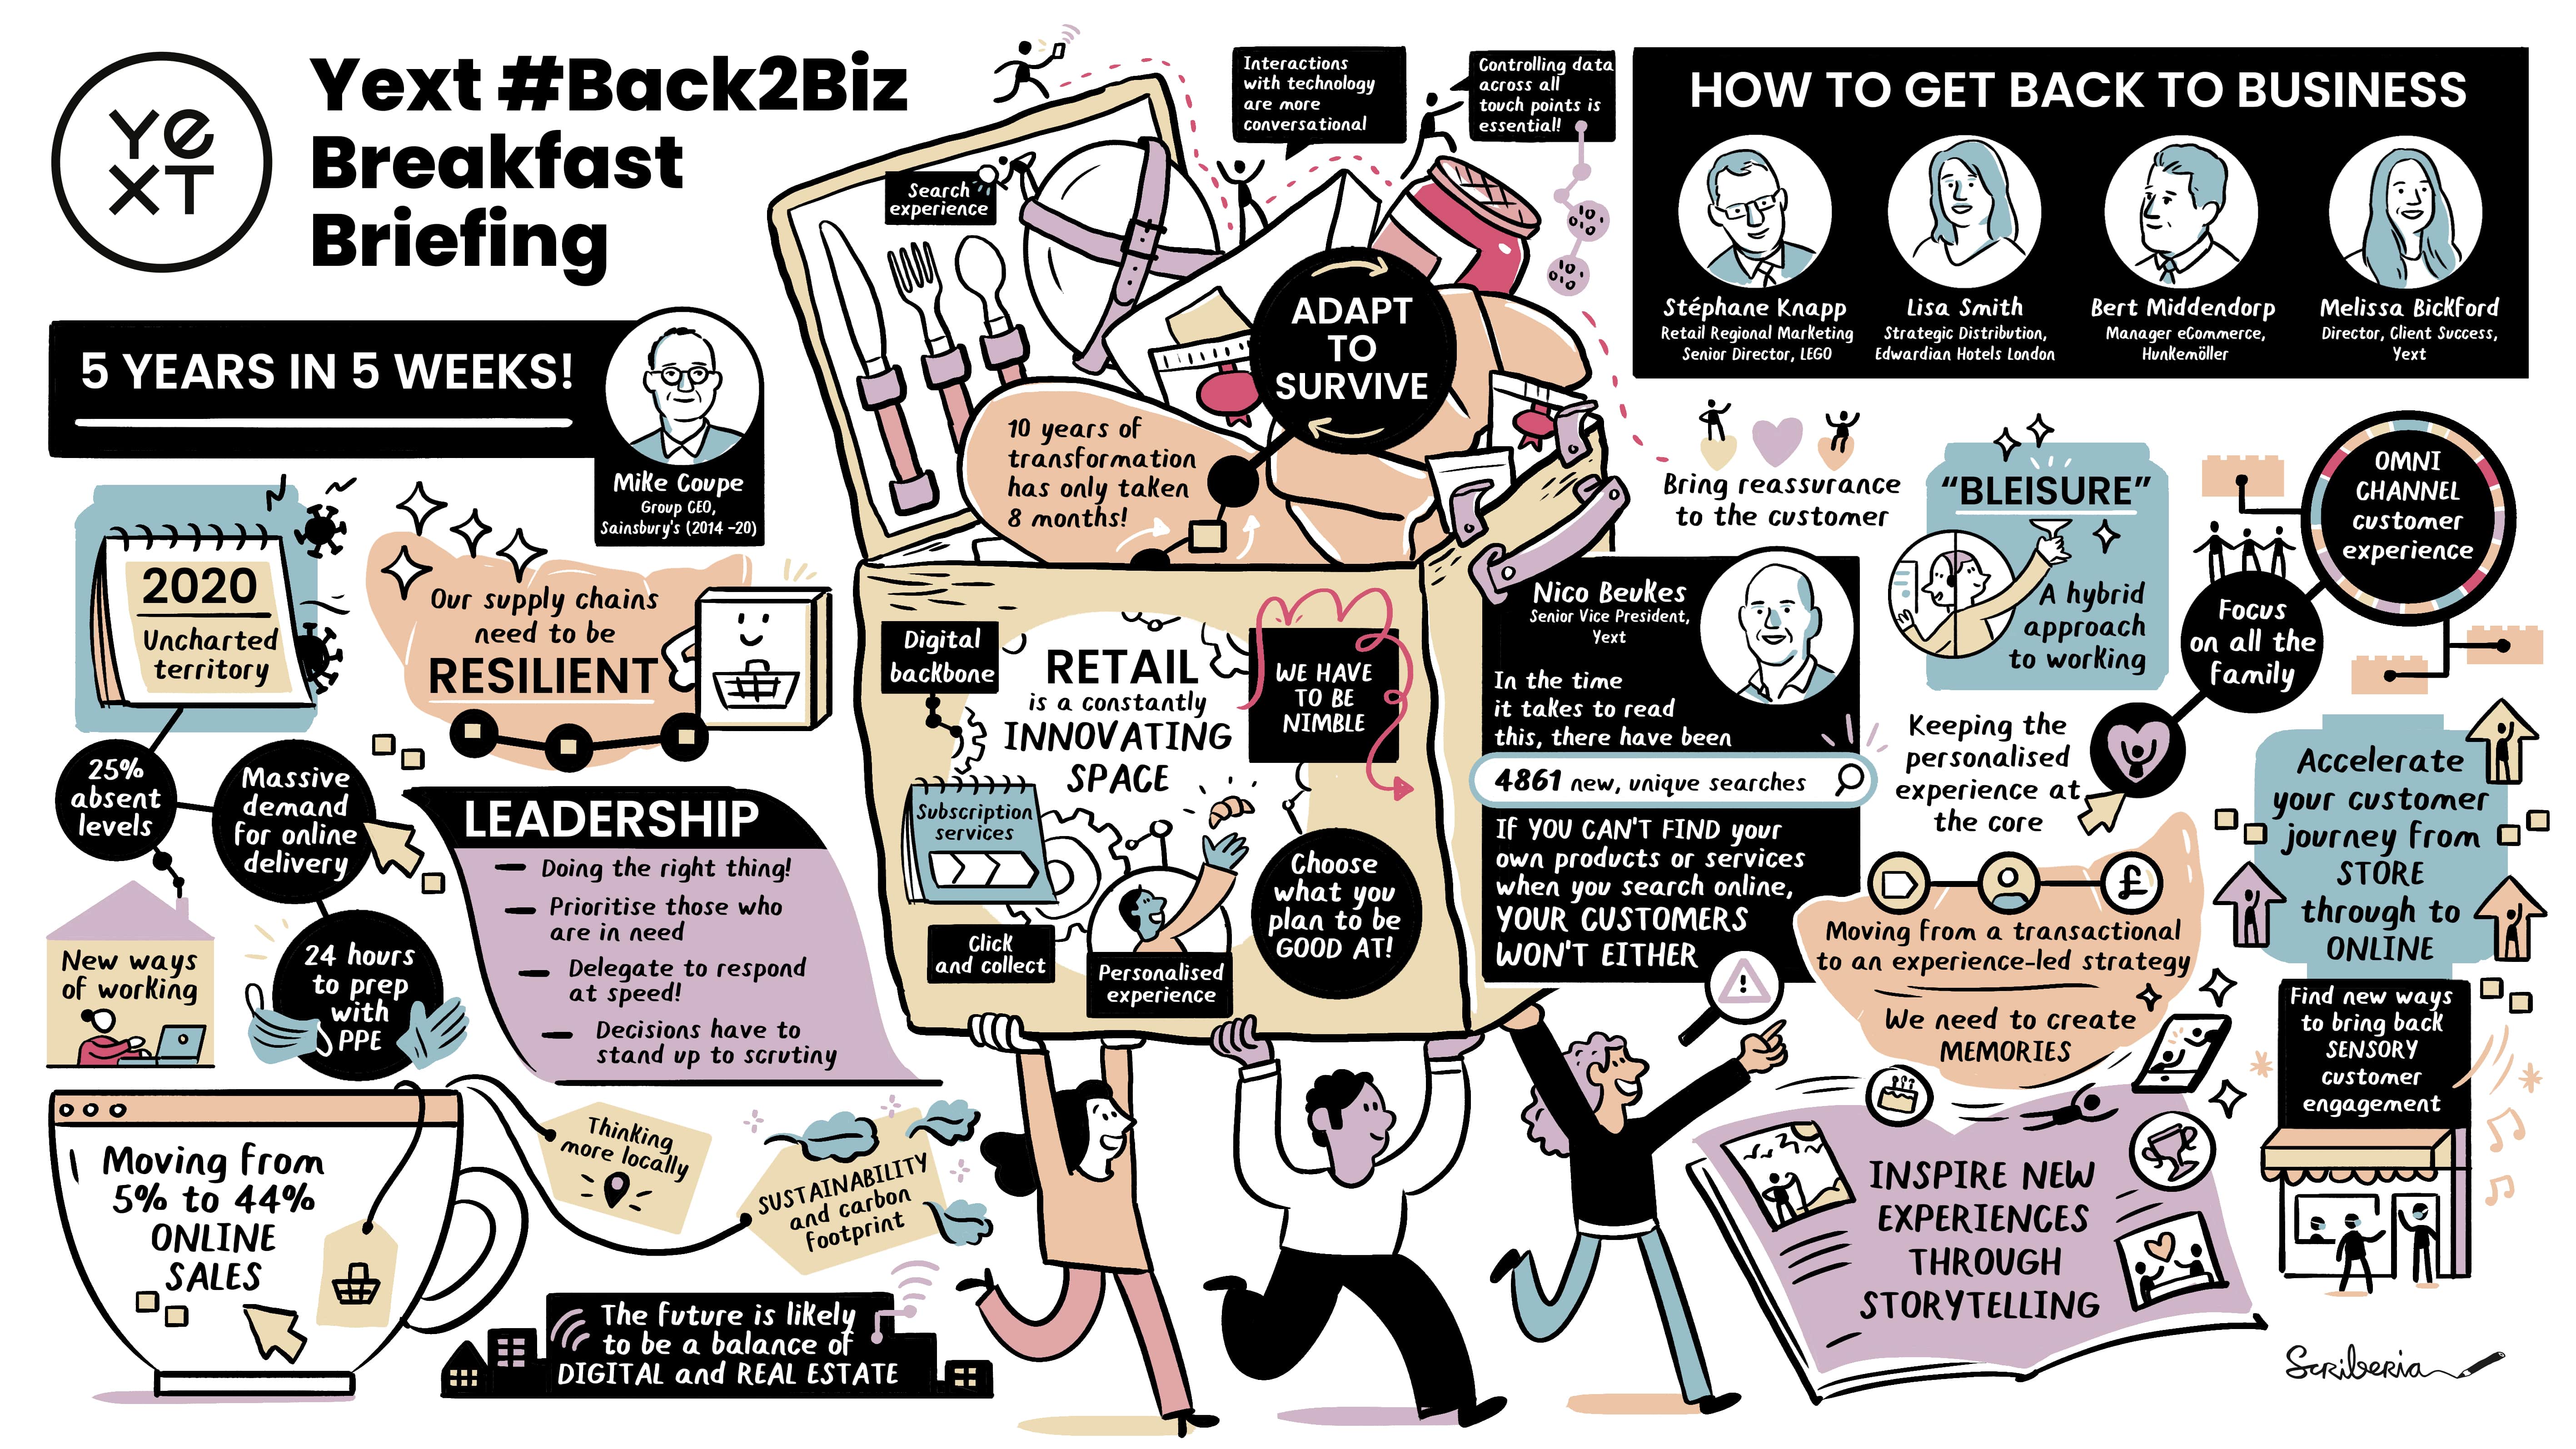 Yext-Back2Biz-Infographic-Final